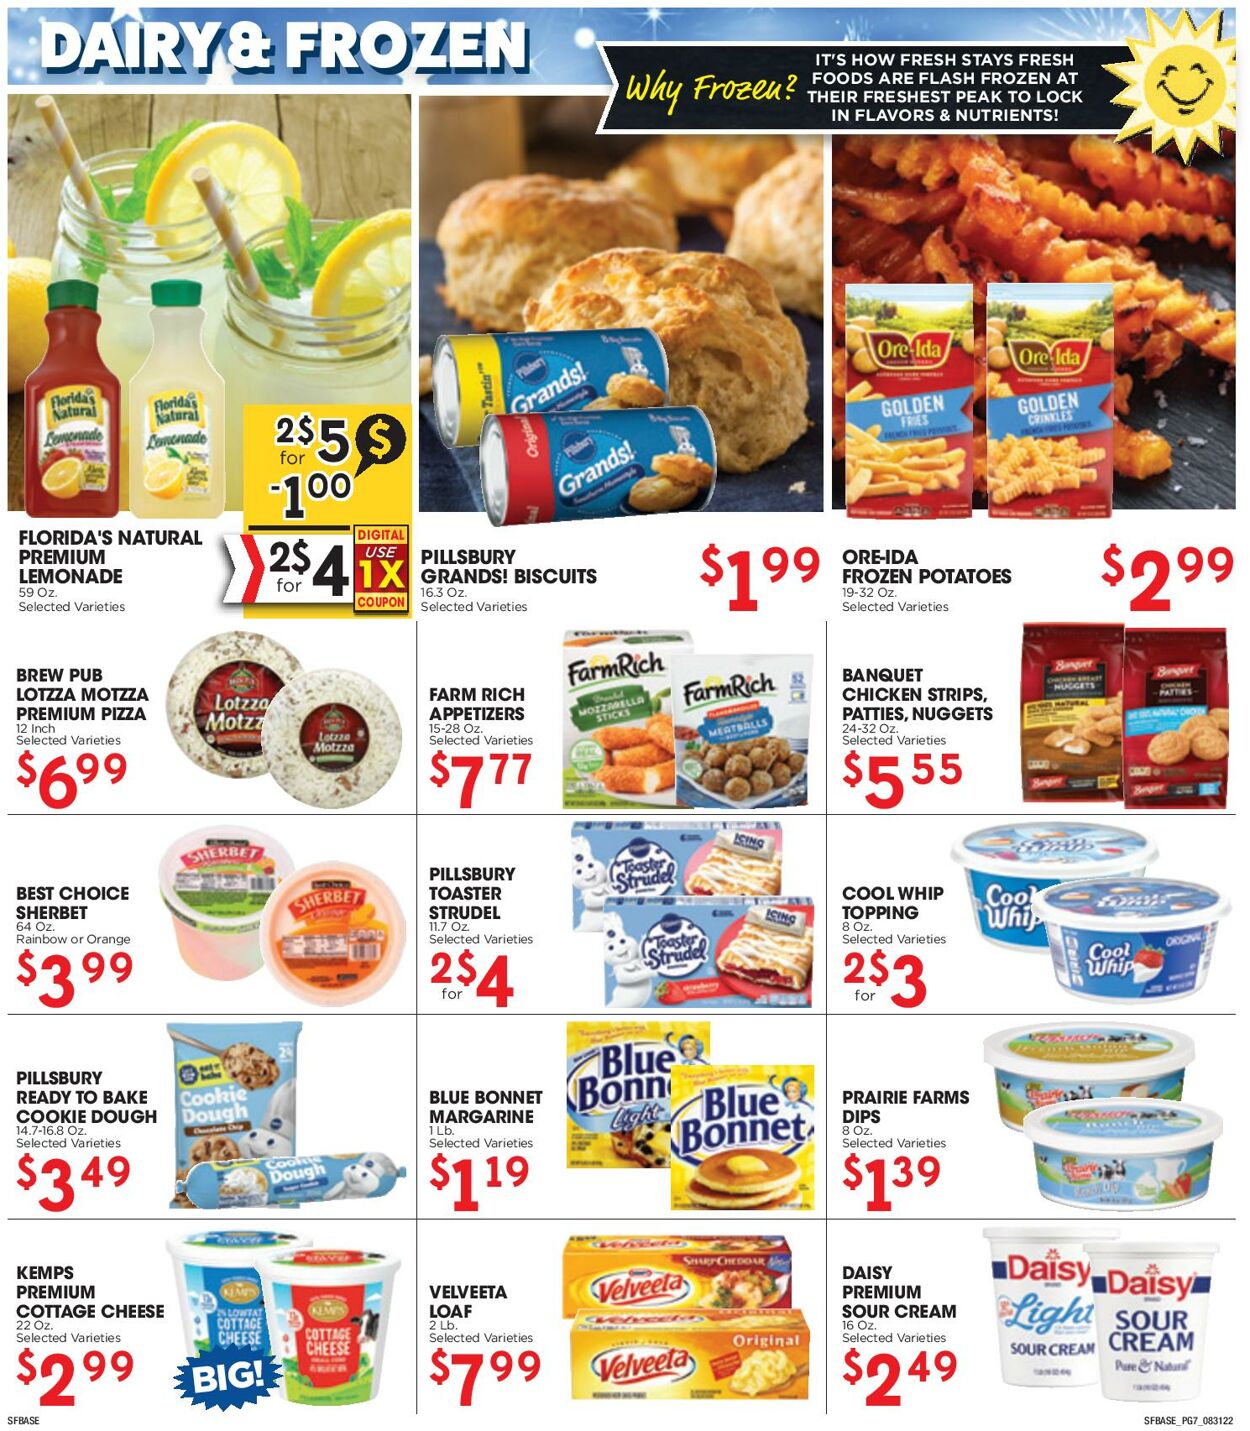 Weekly ad Sunshine Foods 08/31/2022 - 09/06/2022